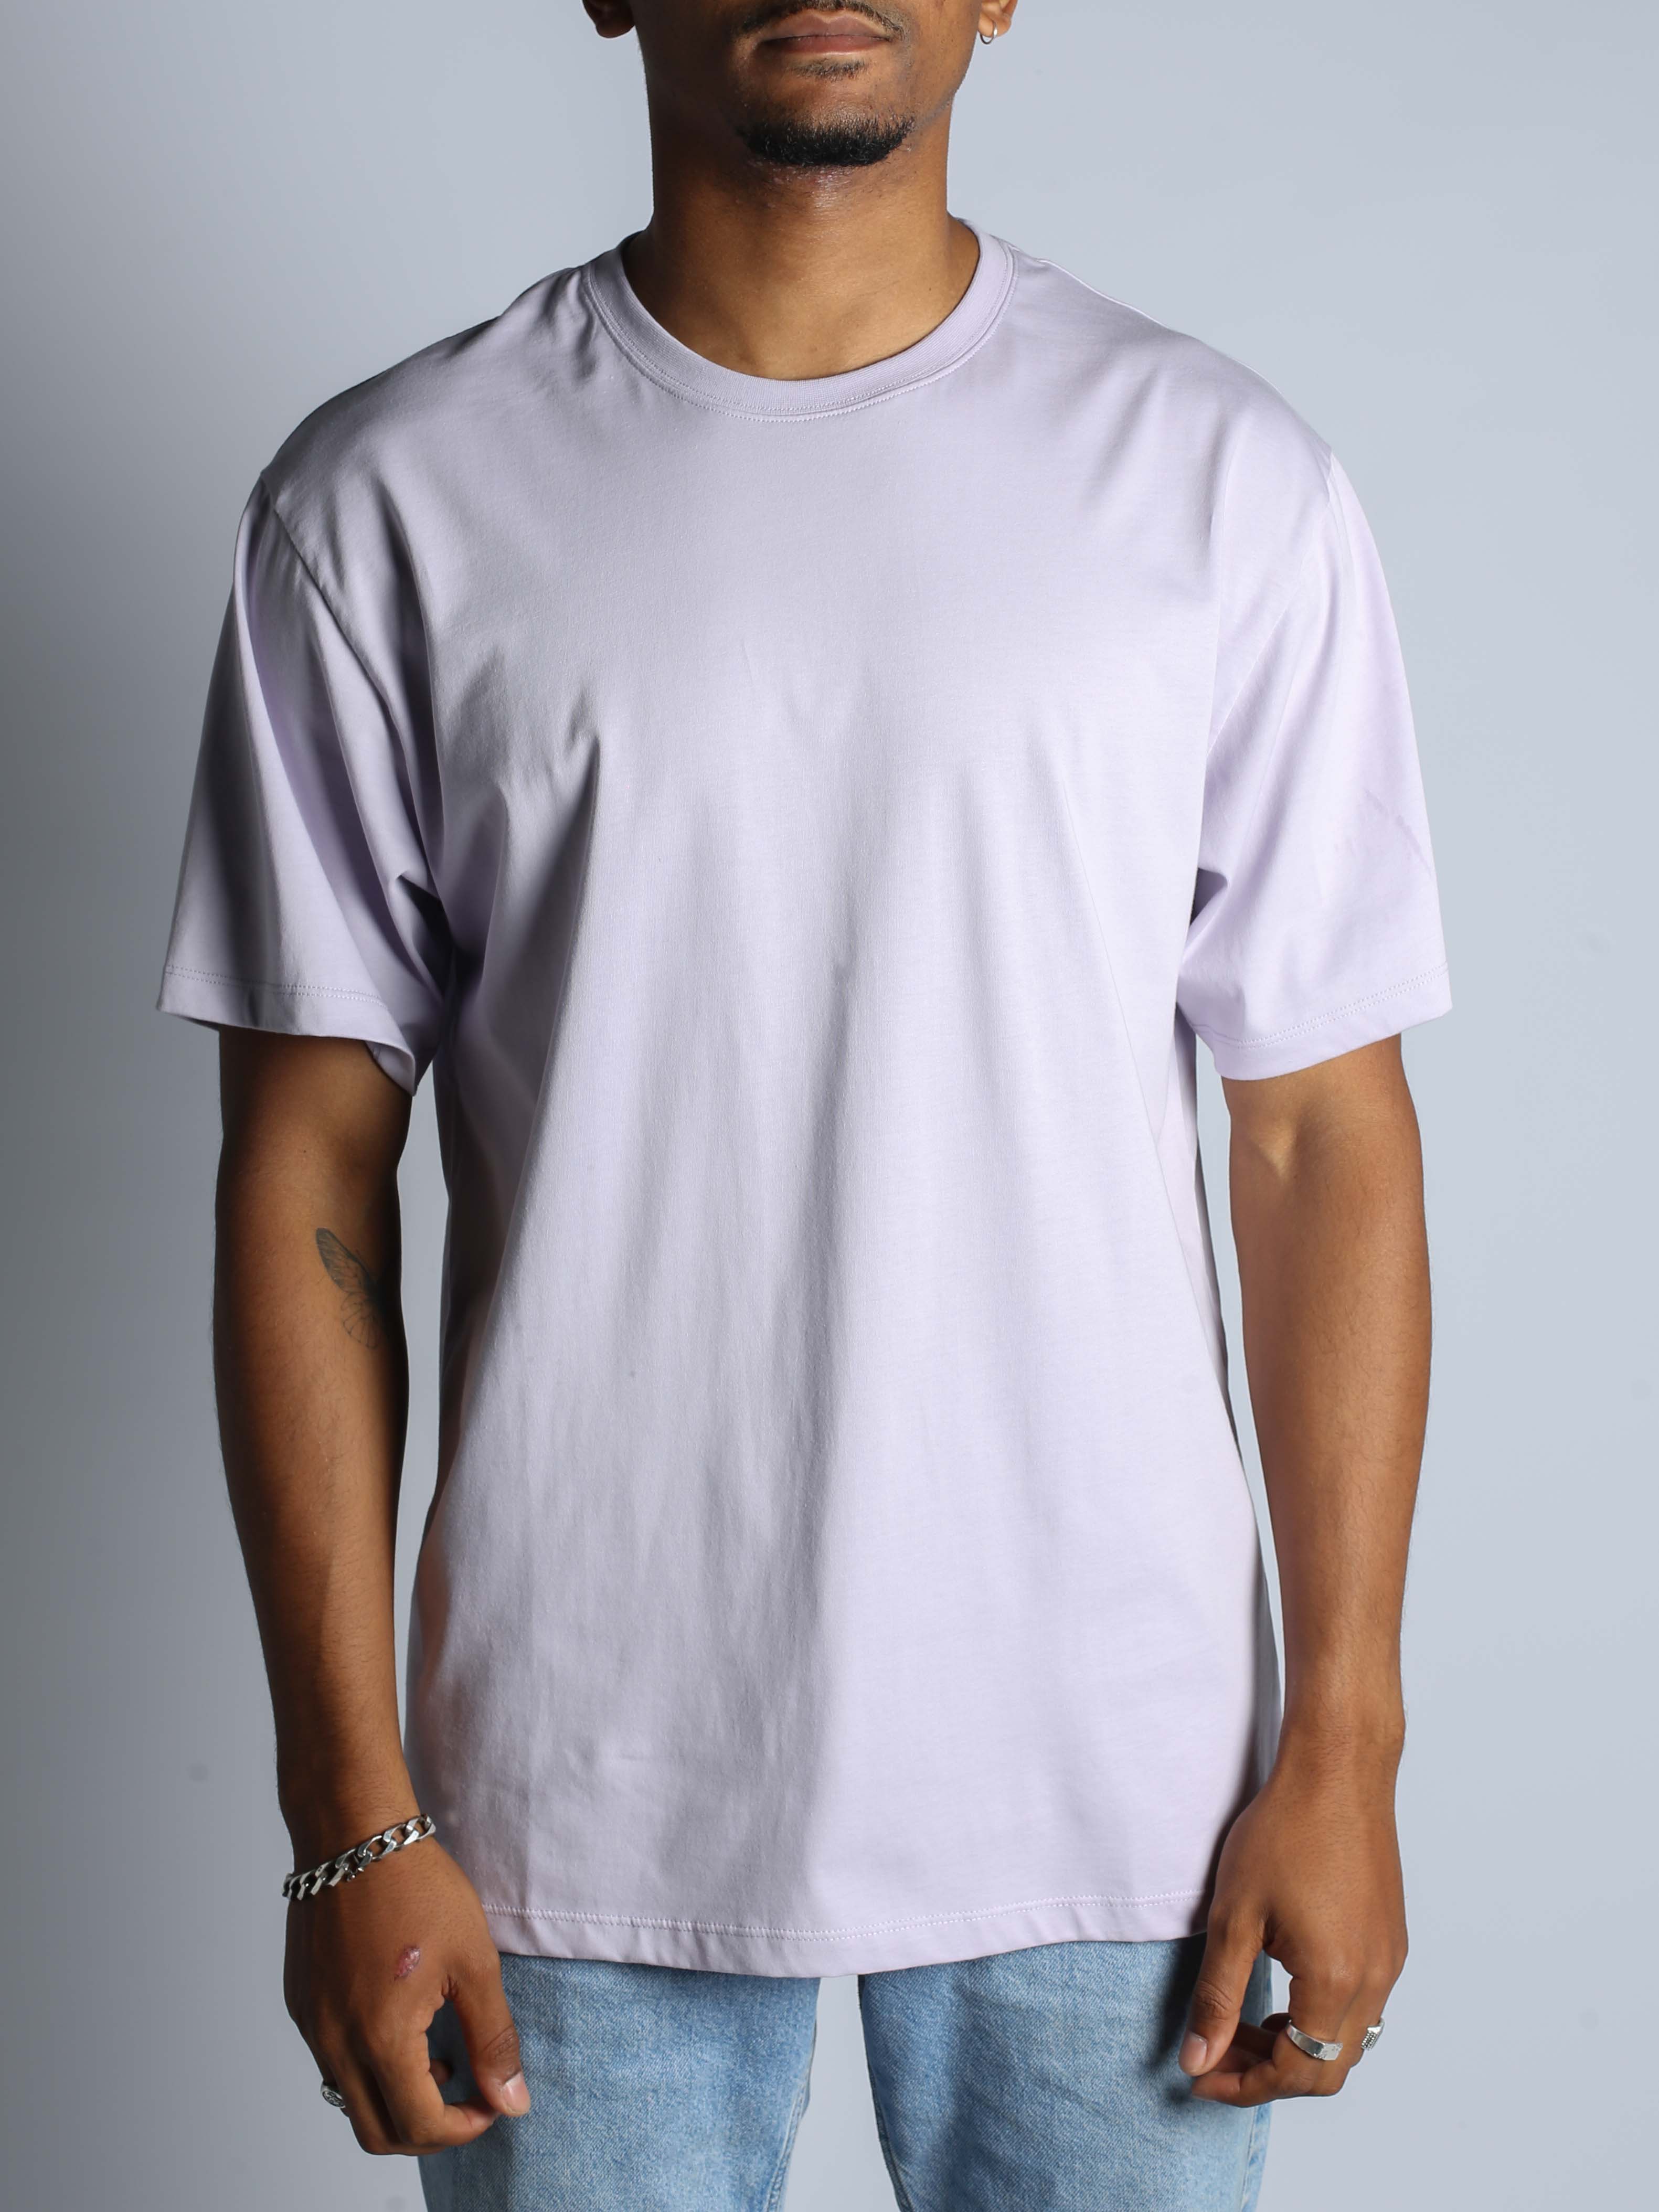 T-Shirt Purple Unisexe - Blanc